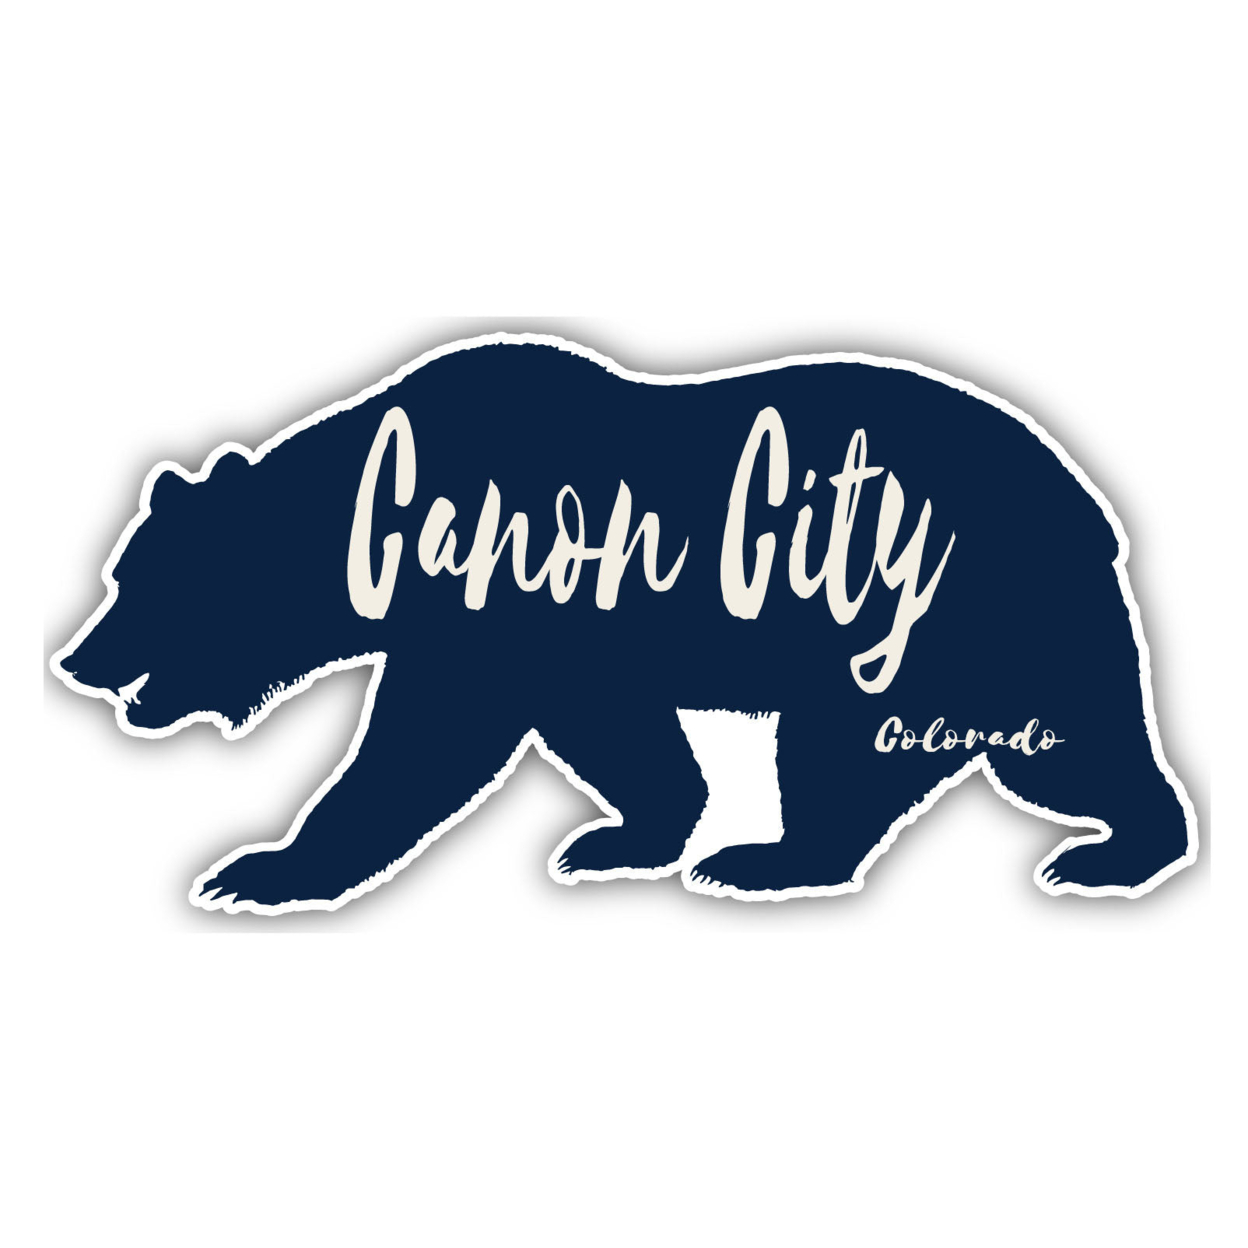 Canon City Colorado Souvenir Decorative Stickers (Choose Theme And Size) - Single Unit, 6-Inch, Tent